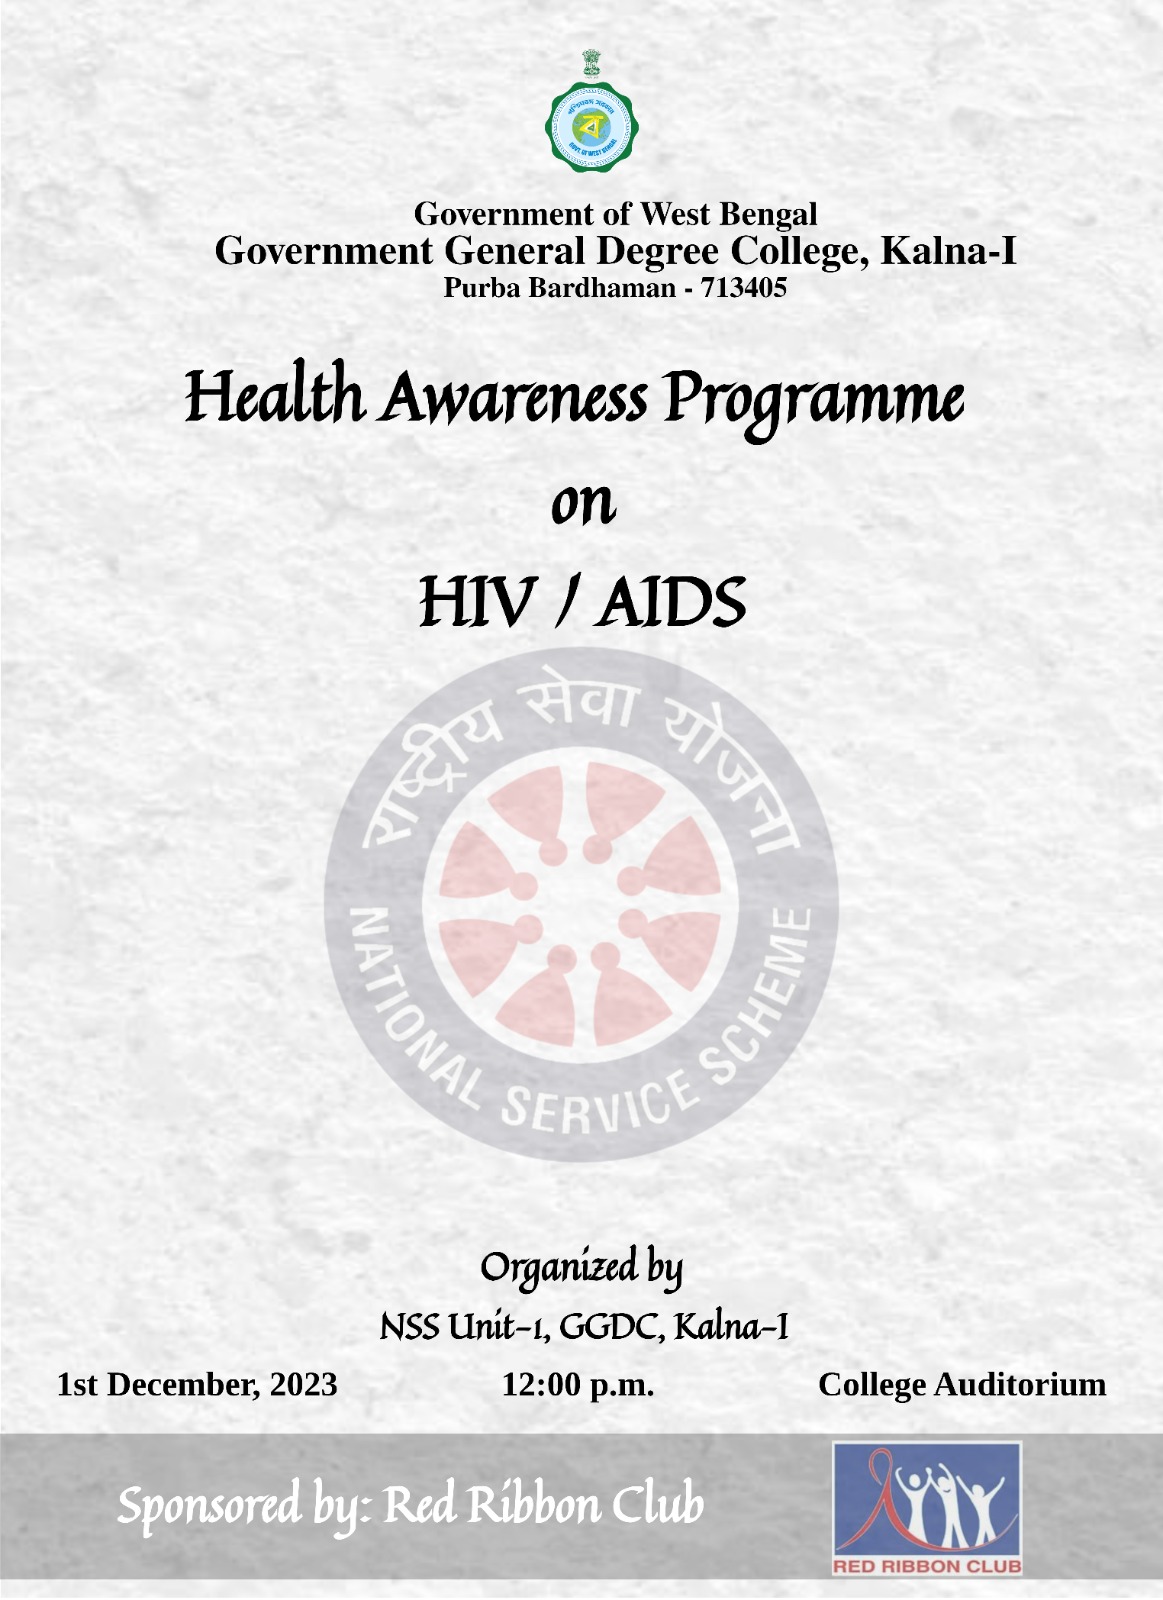 Health Awareness Programme on HIV/AIDS